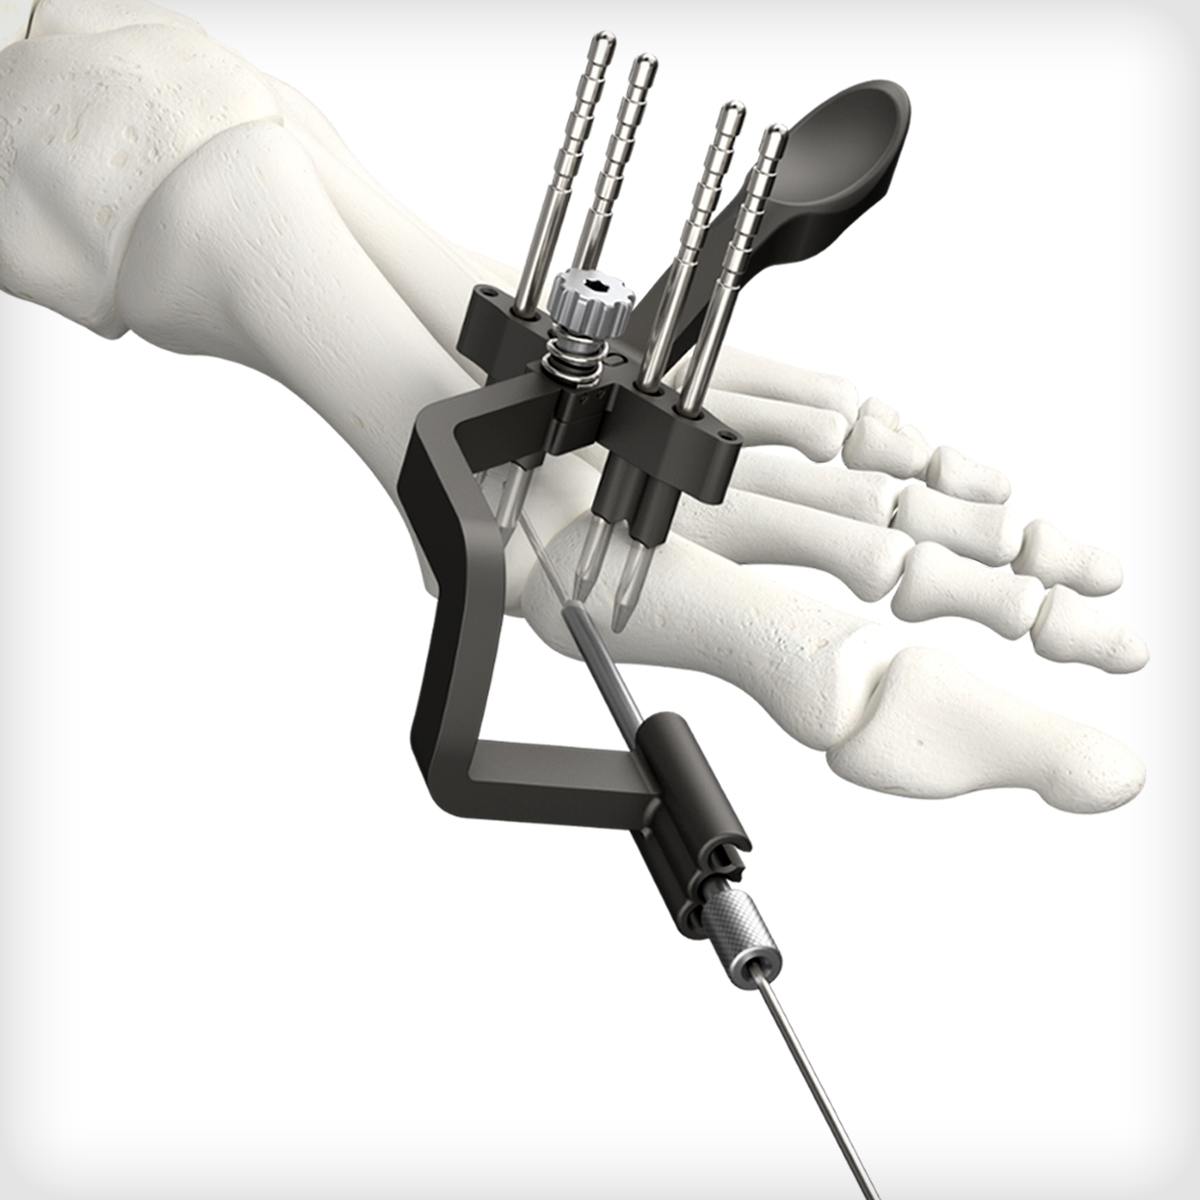 REFLEX® Nitinol Staples - Unite Foot and Ankle